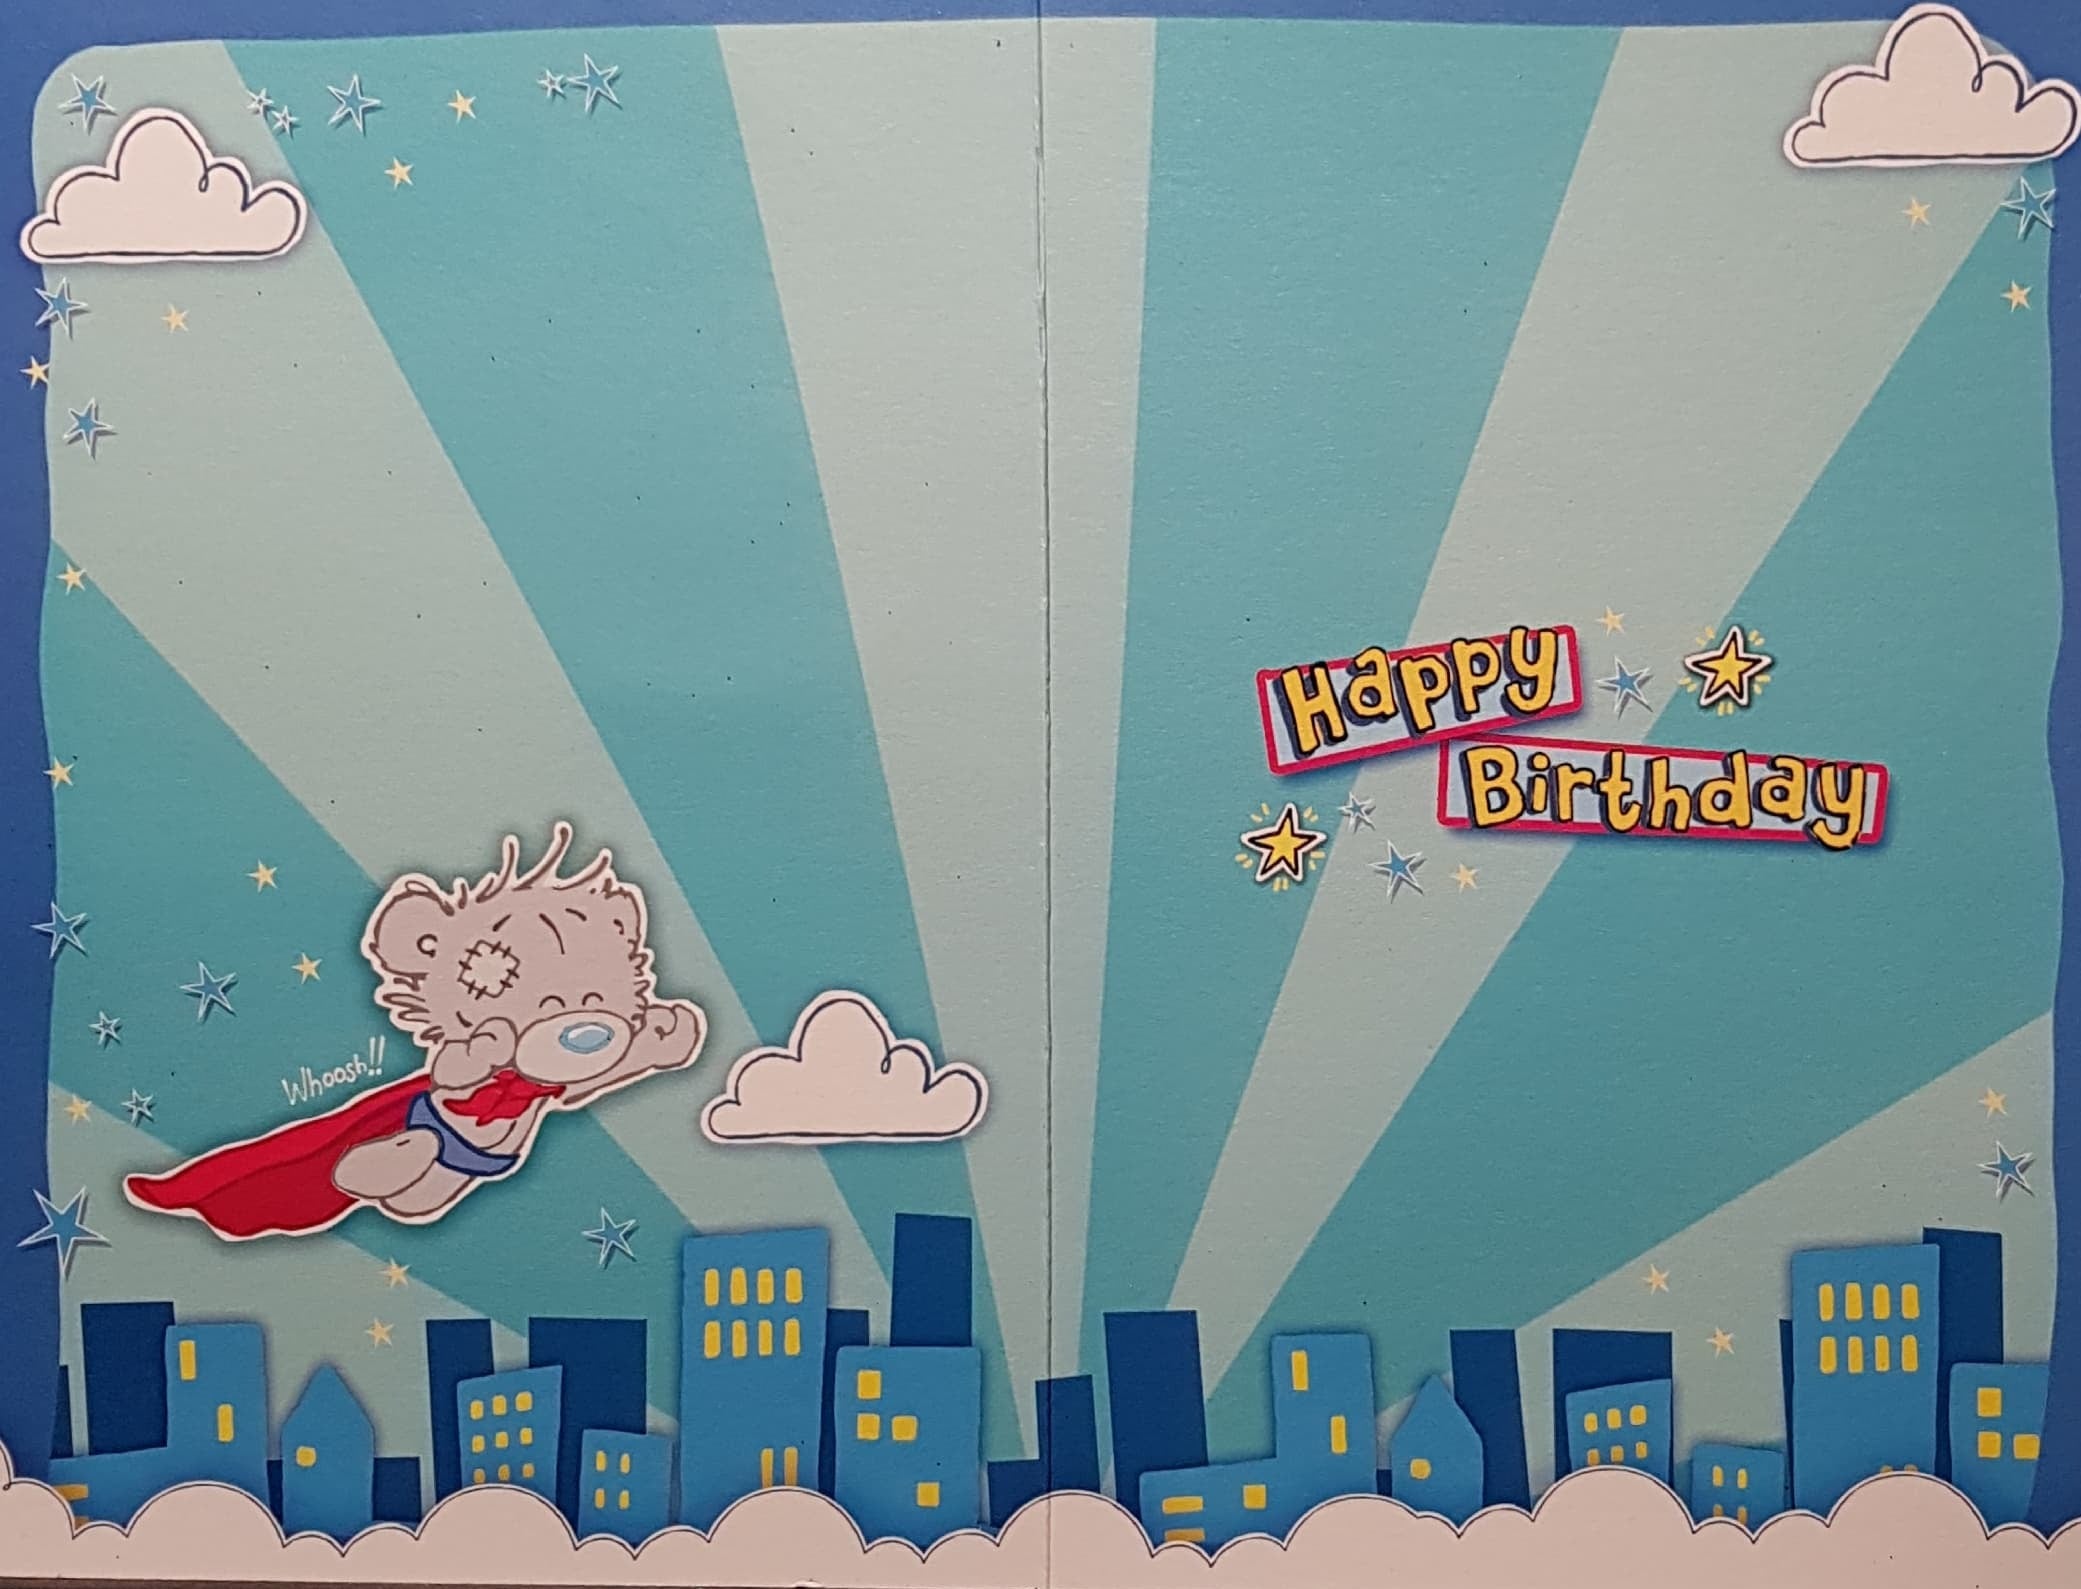 Age 6 Birthday Card - Teddy Super Hero Flying Over City